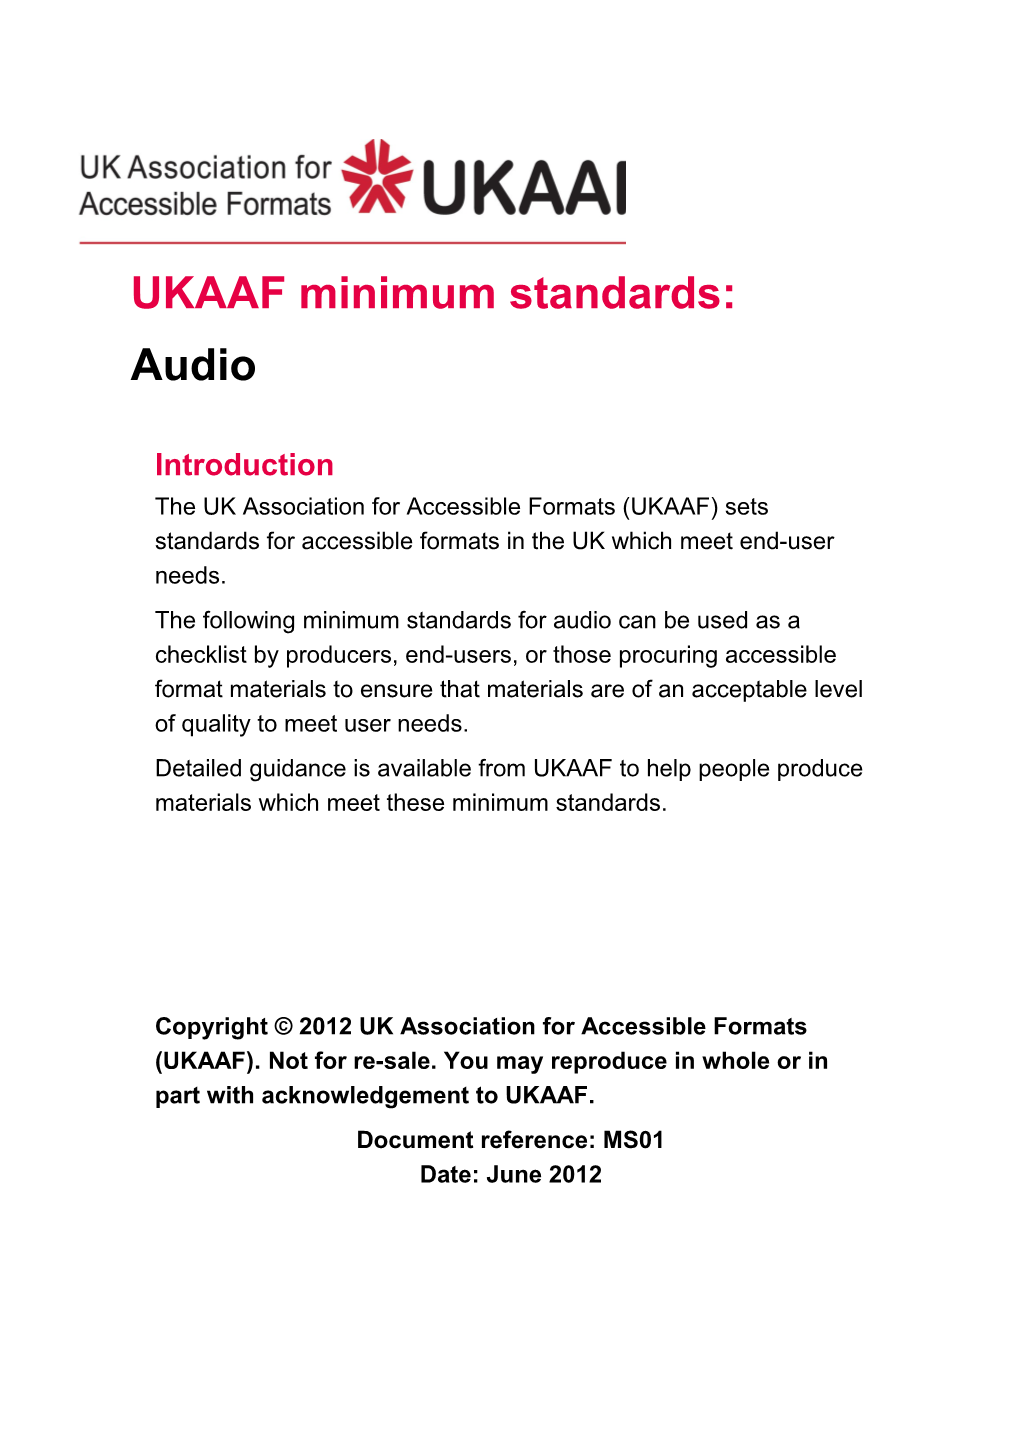 MS01 UKAAF Minimum Standards: Audio